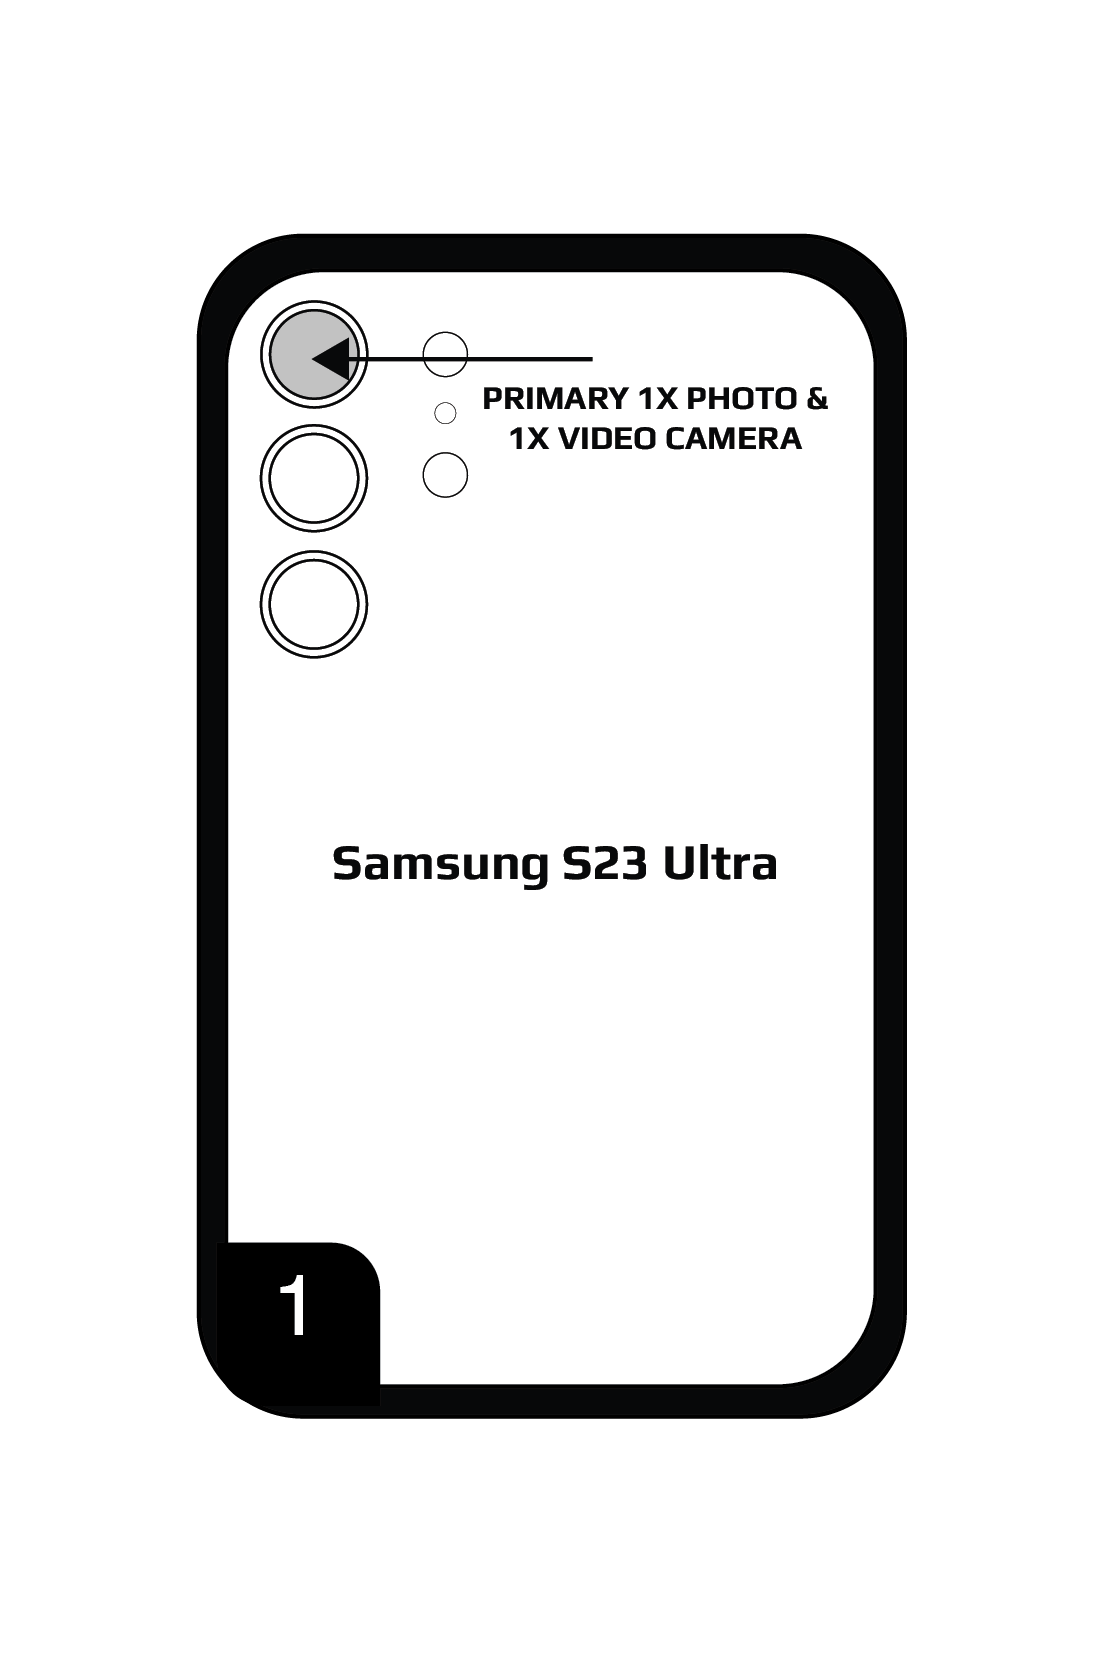 Samsung S23 ultra camera step 1